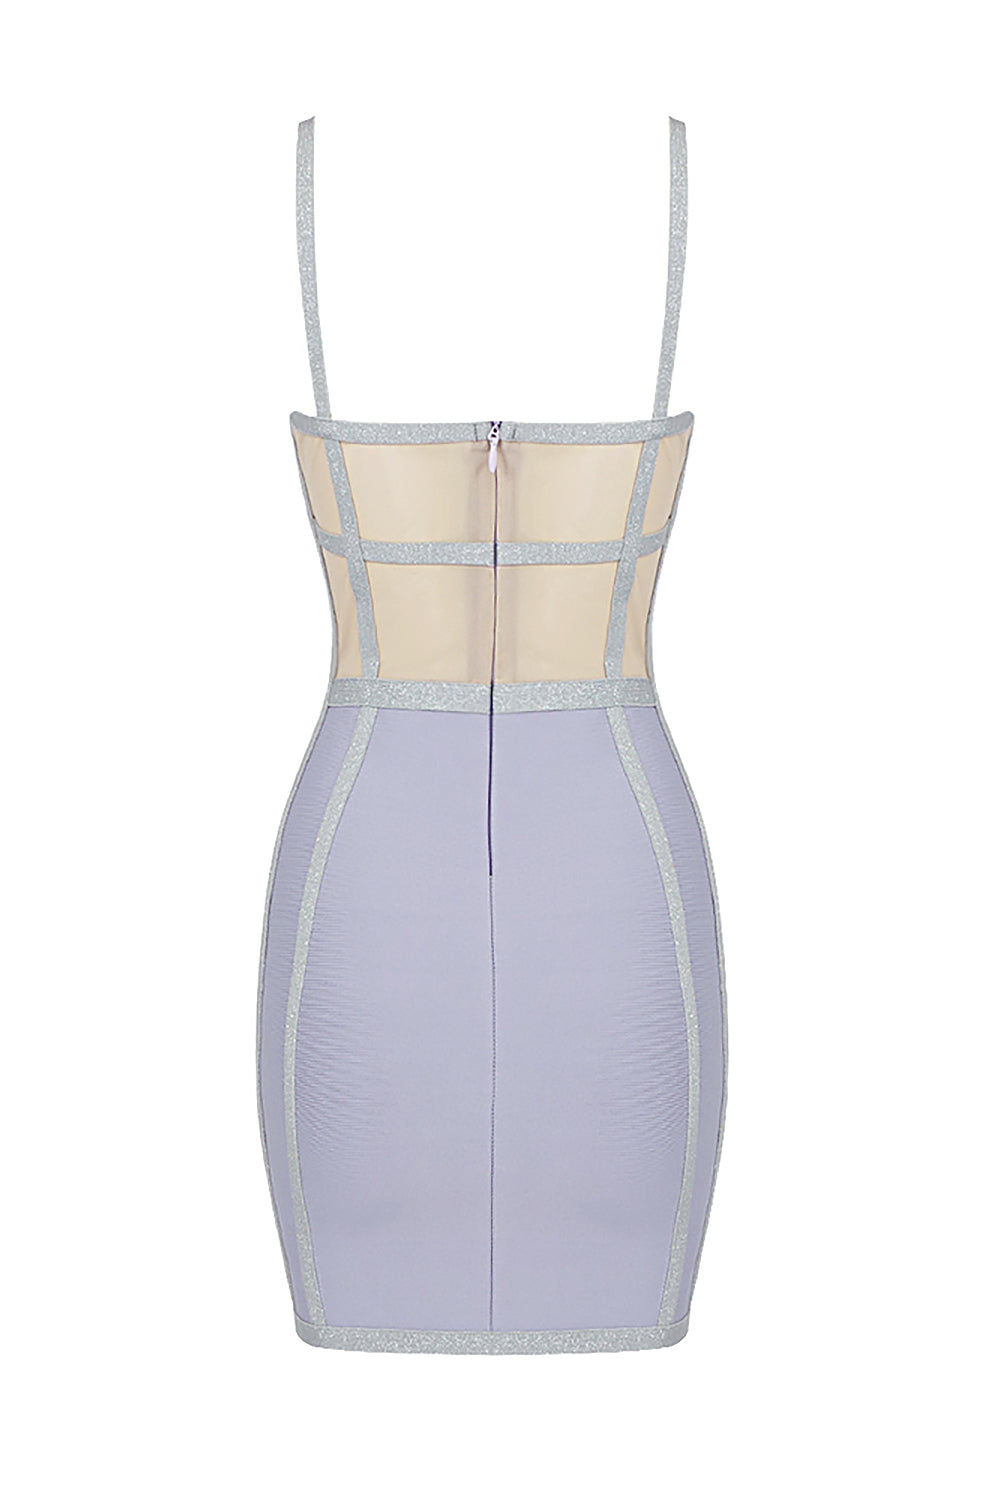 Strappy V-Neck Shiny Hollow Mini Bandage Dress In Lavender